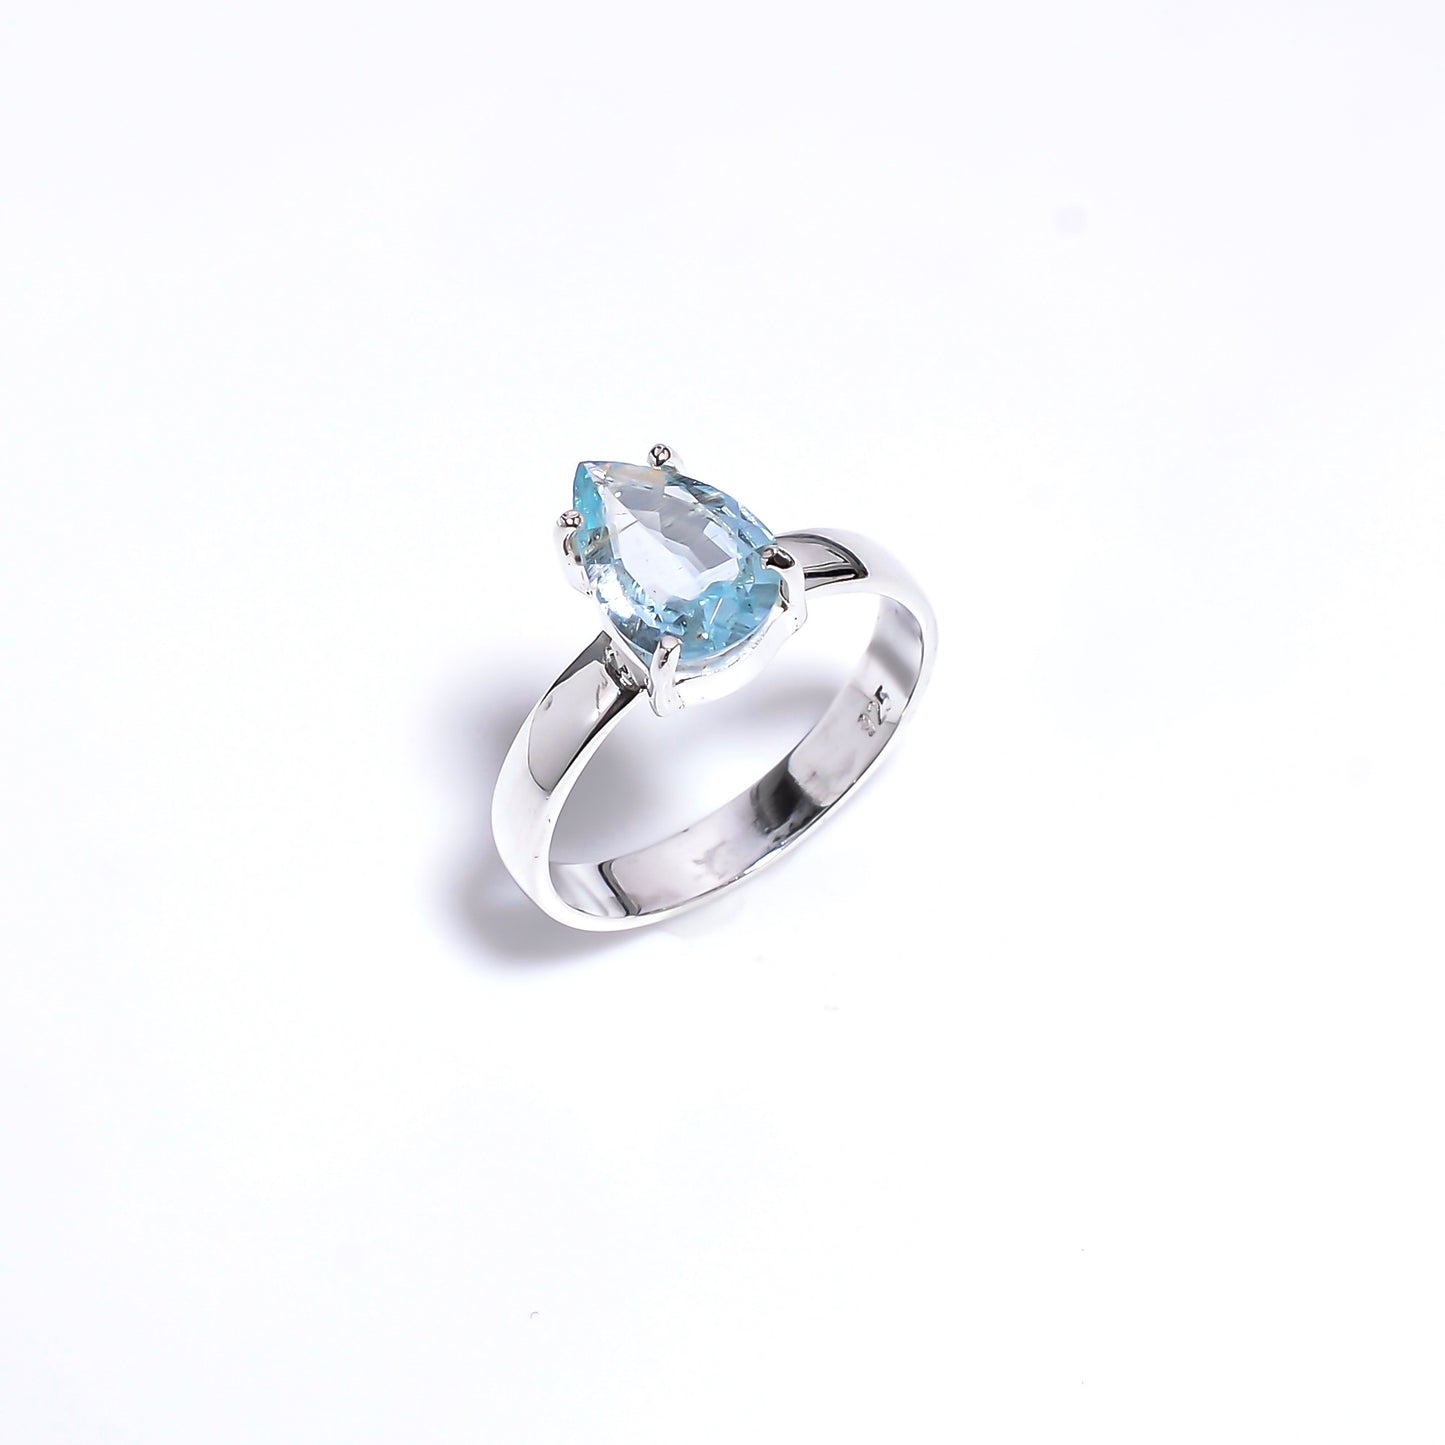 Pear Cut Aquamarine Ring Sterling Silver 925